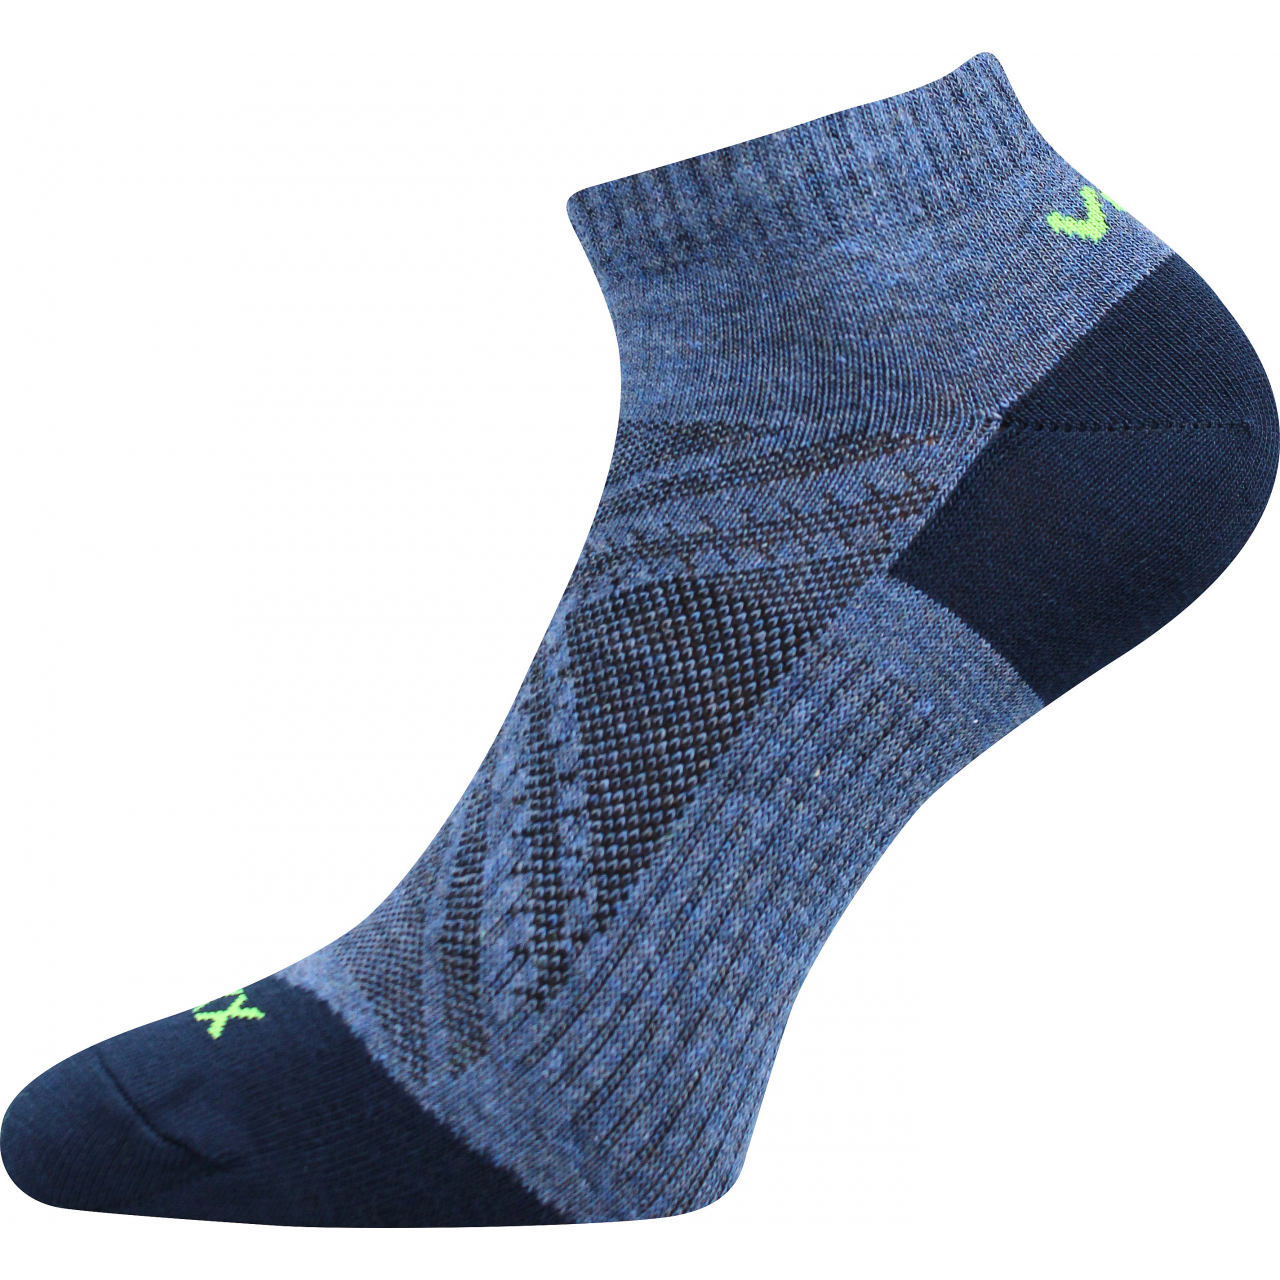 Ponožky slabé unisex Voxx Rex 15 - modré, 39-42